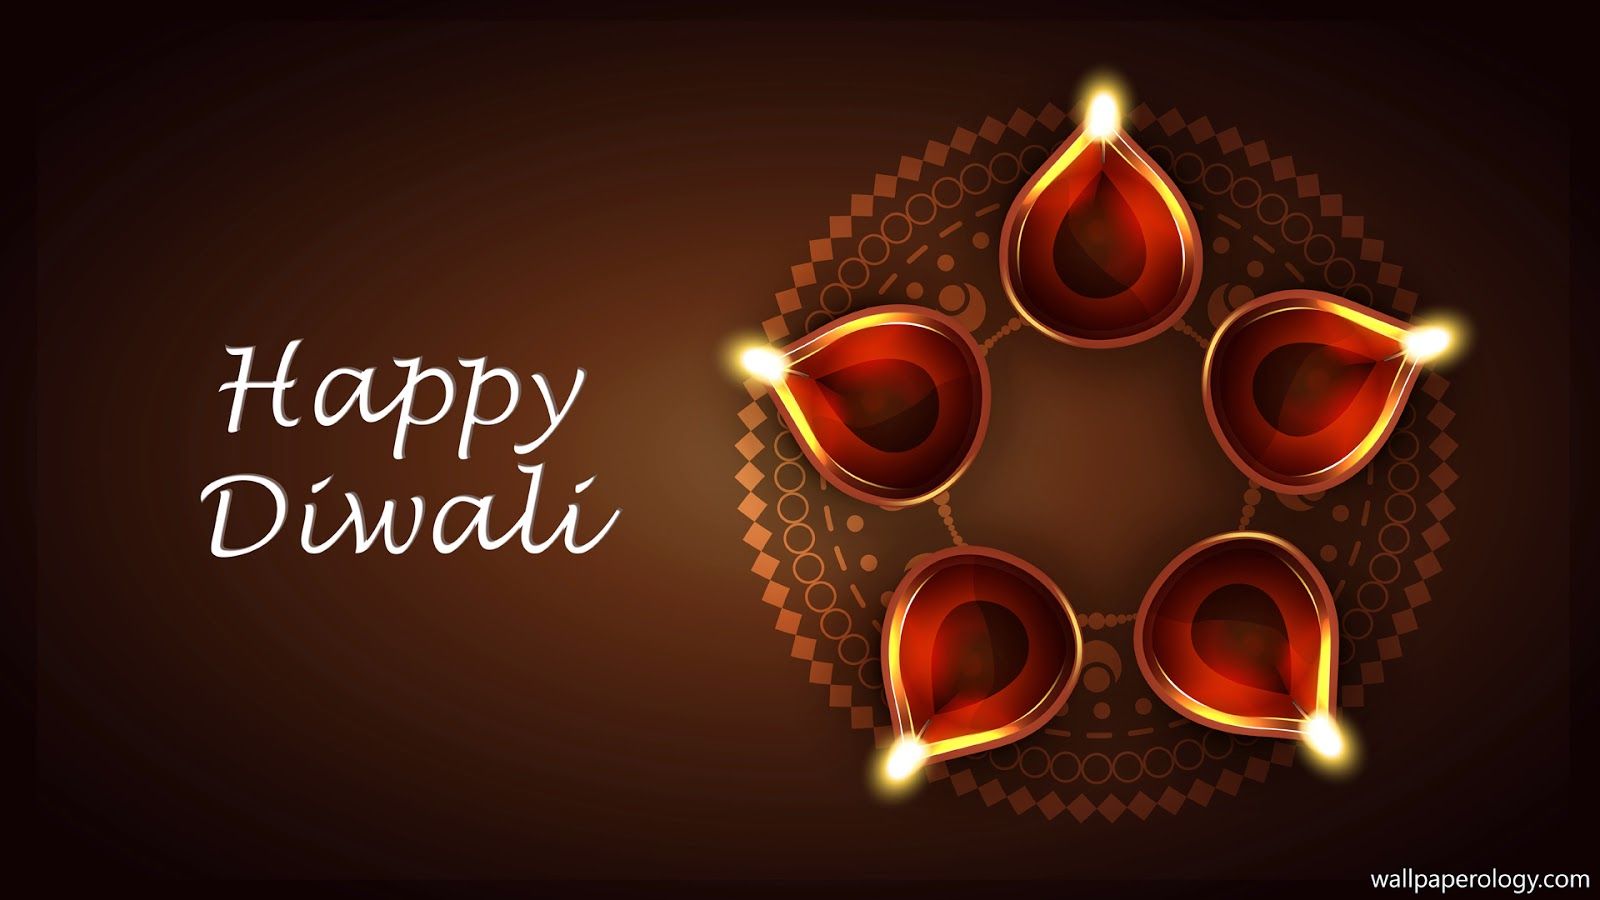 Happy Diwali Wishes 2018 - HD Wallpaper 